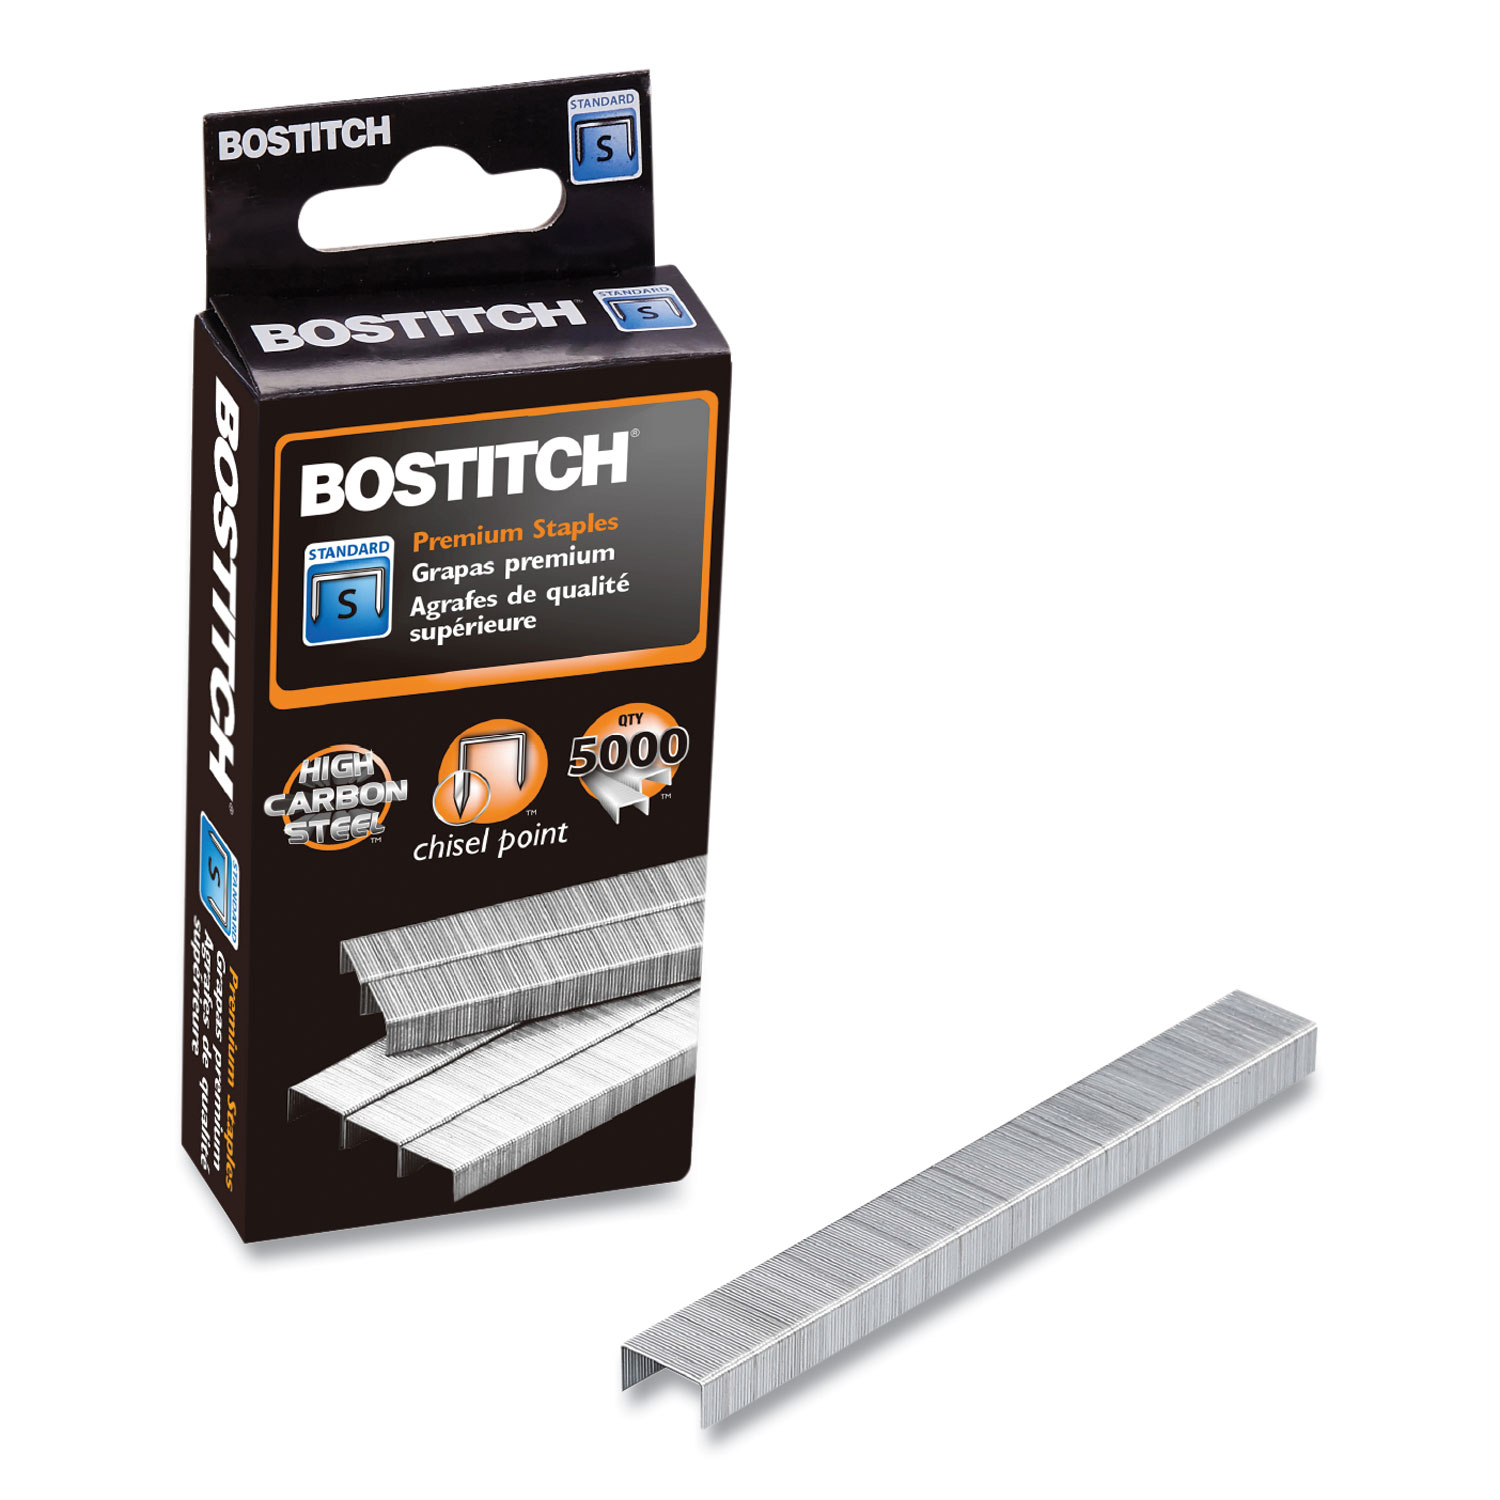 Bostitch Impulse Electric Stapler, 30 Sheet Capacity, Black